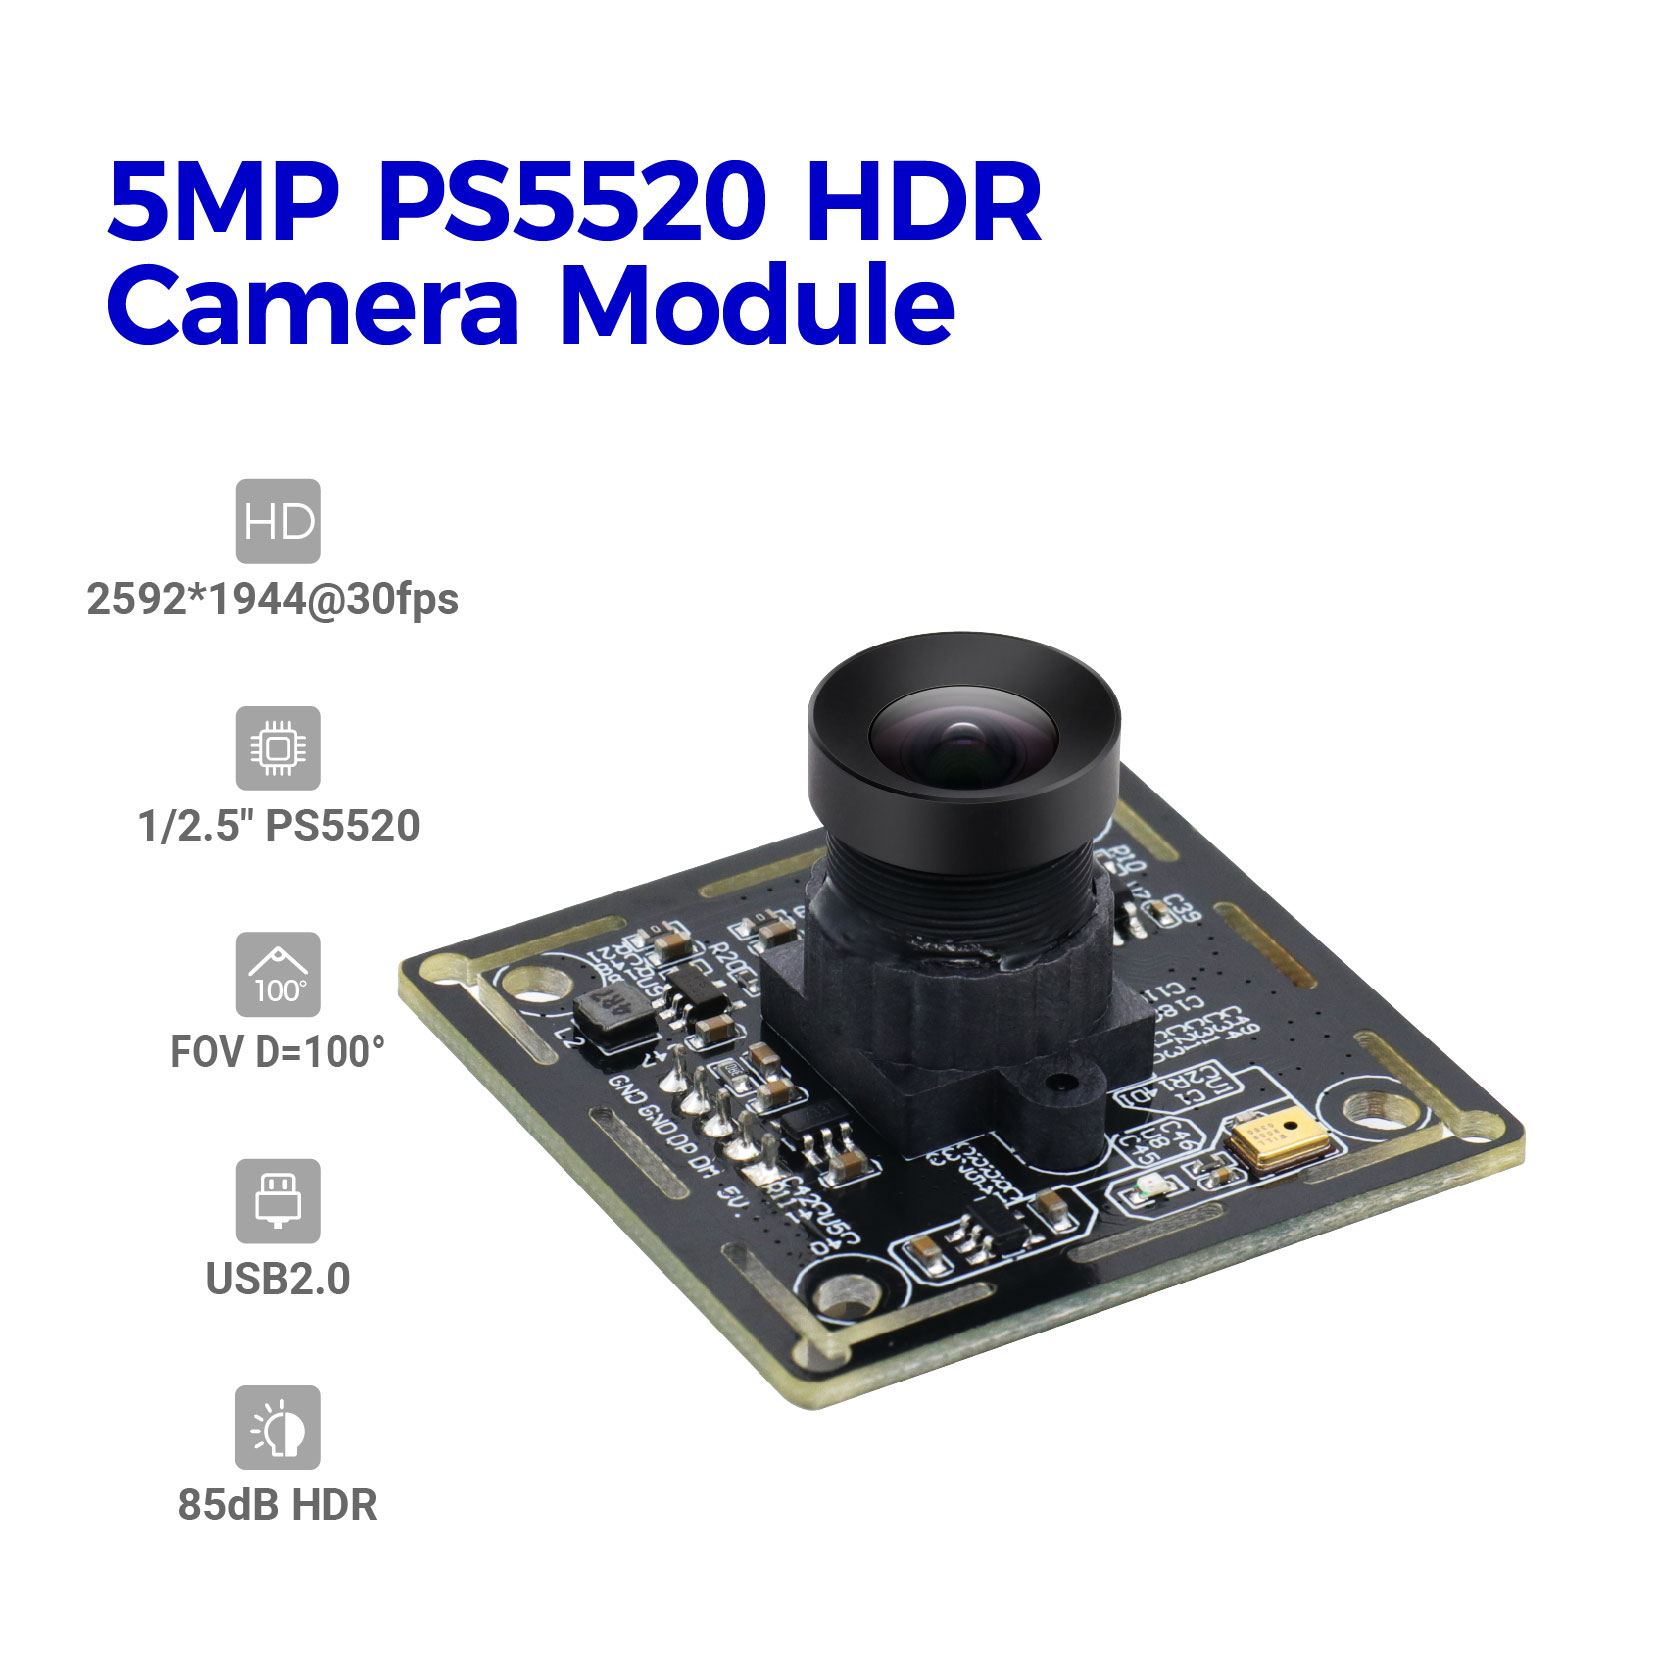 5MP PS5520 HDR Camera Module